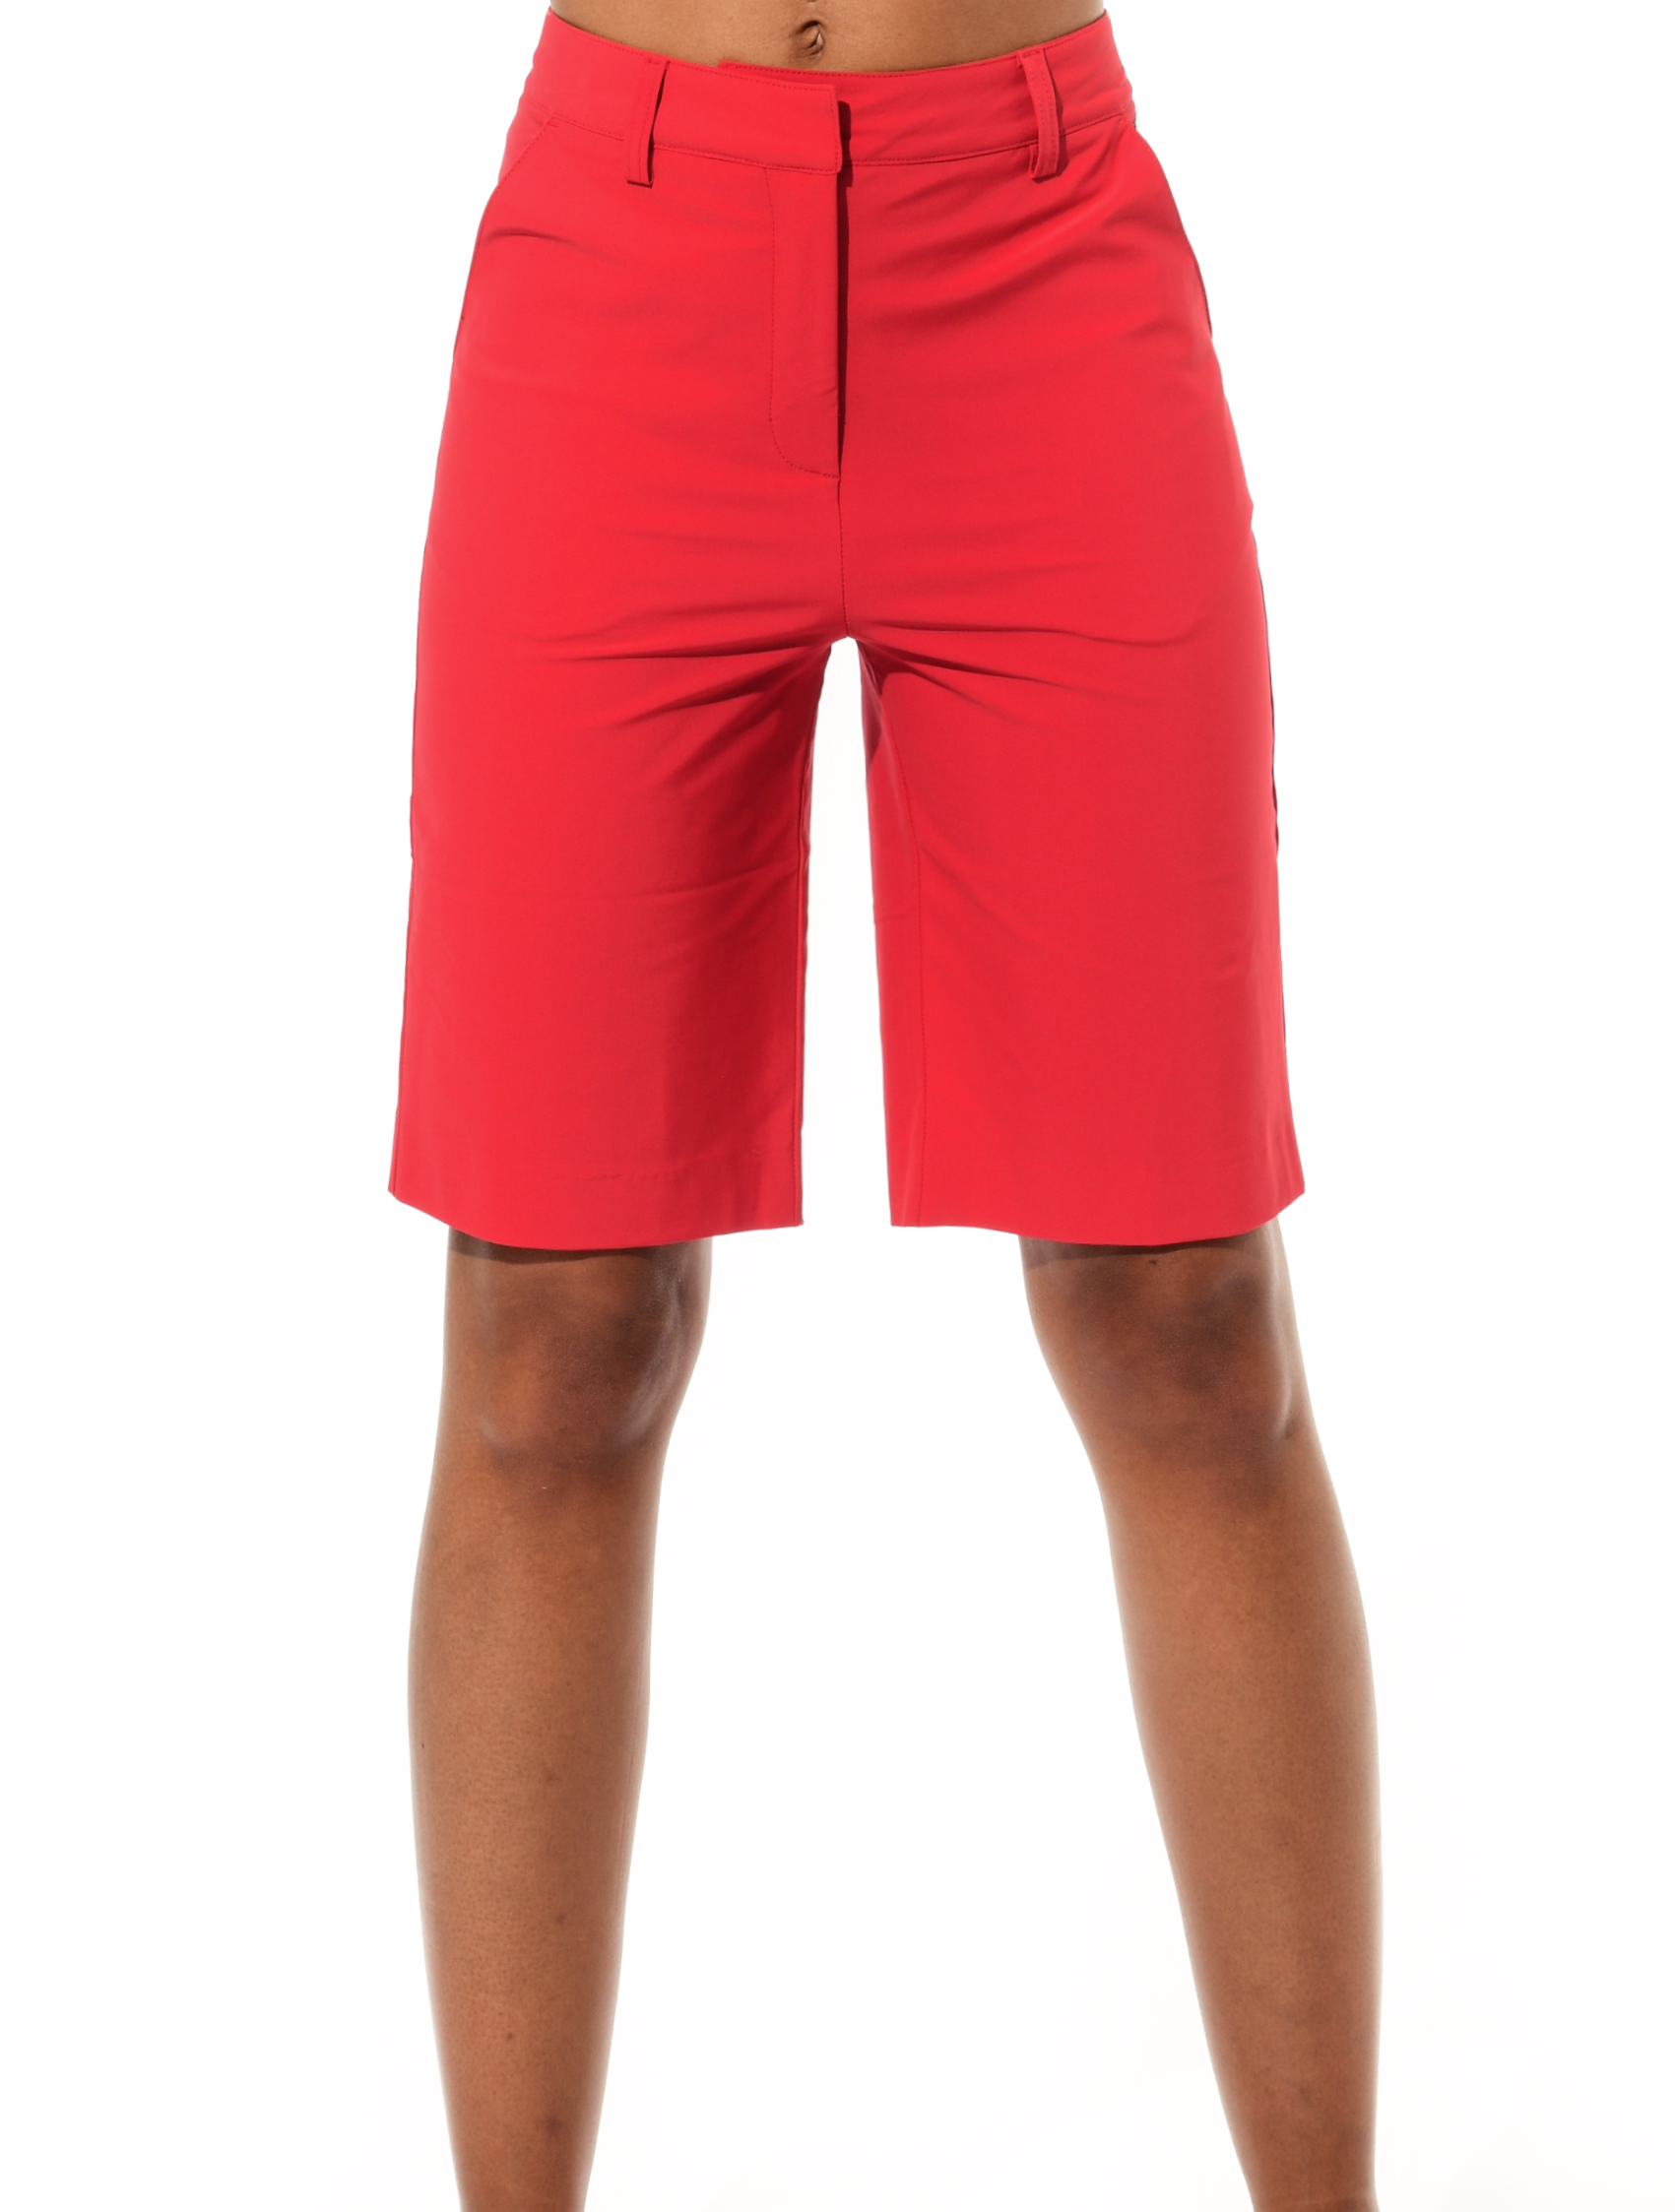 4way stretch bermuda shorts red 